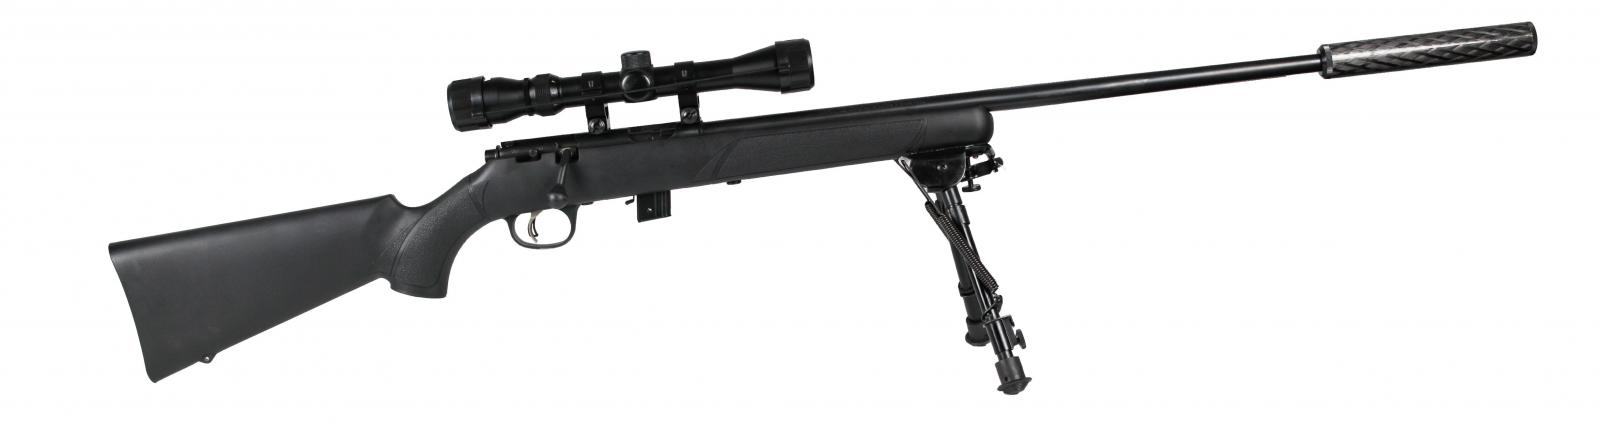 Pack Carabine MARLIN XT + Lunette OPTIMA 3-9x32 + Silencieux + Bipied